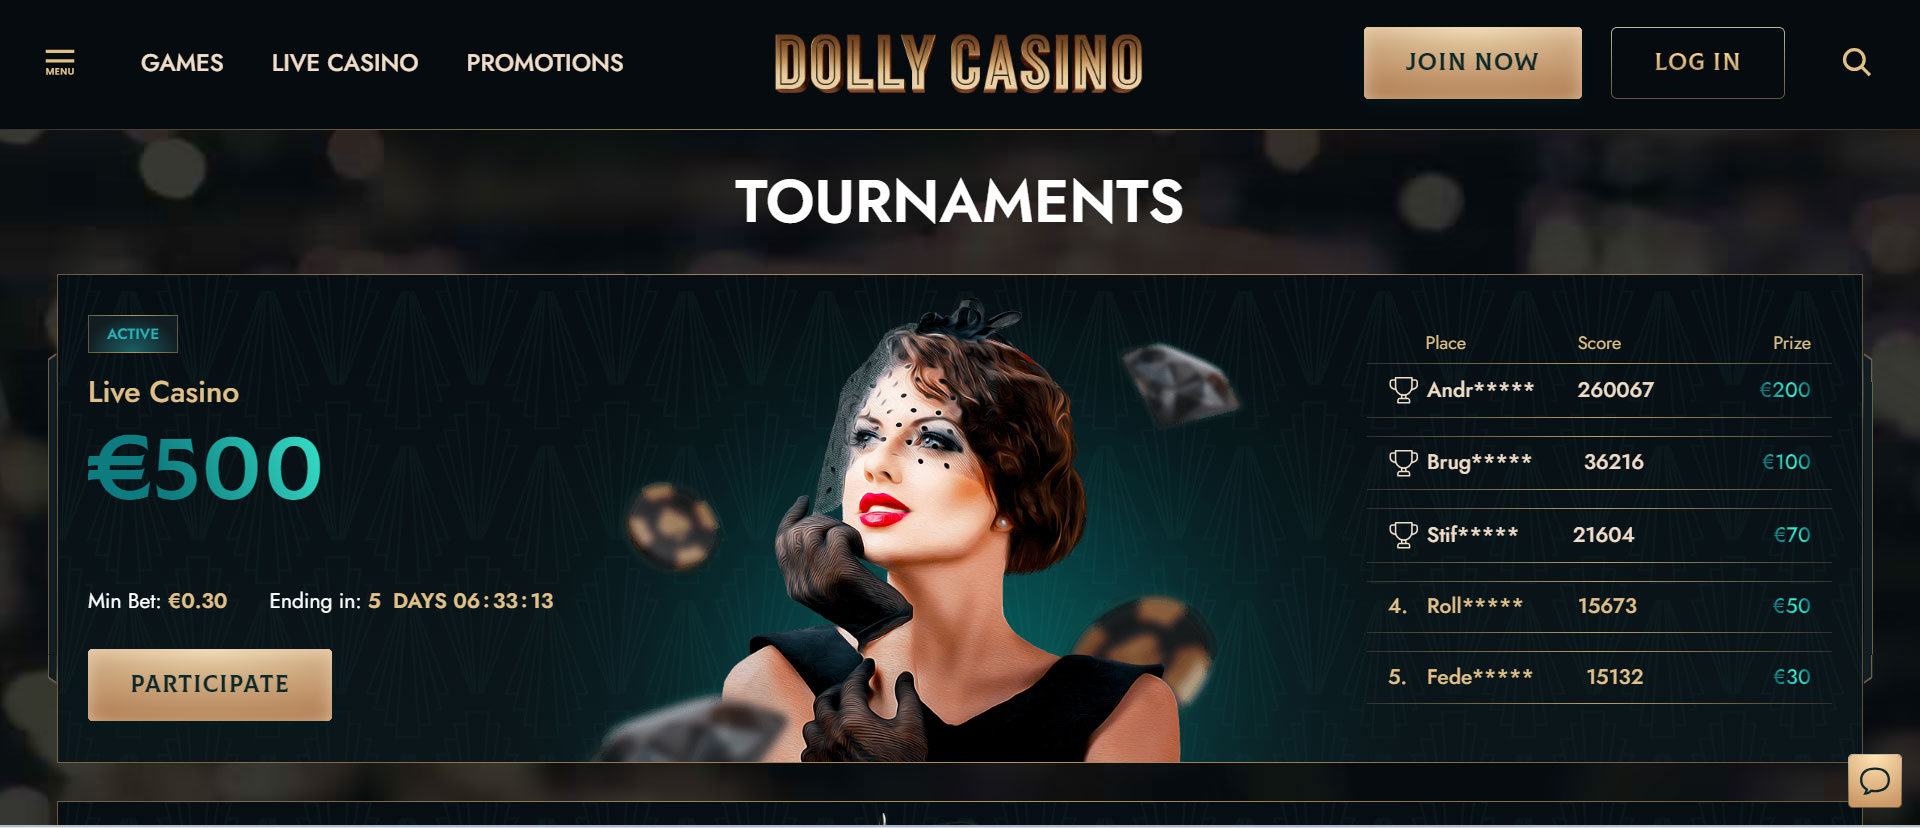 Dolly Casino Tournaments